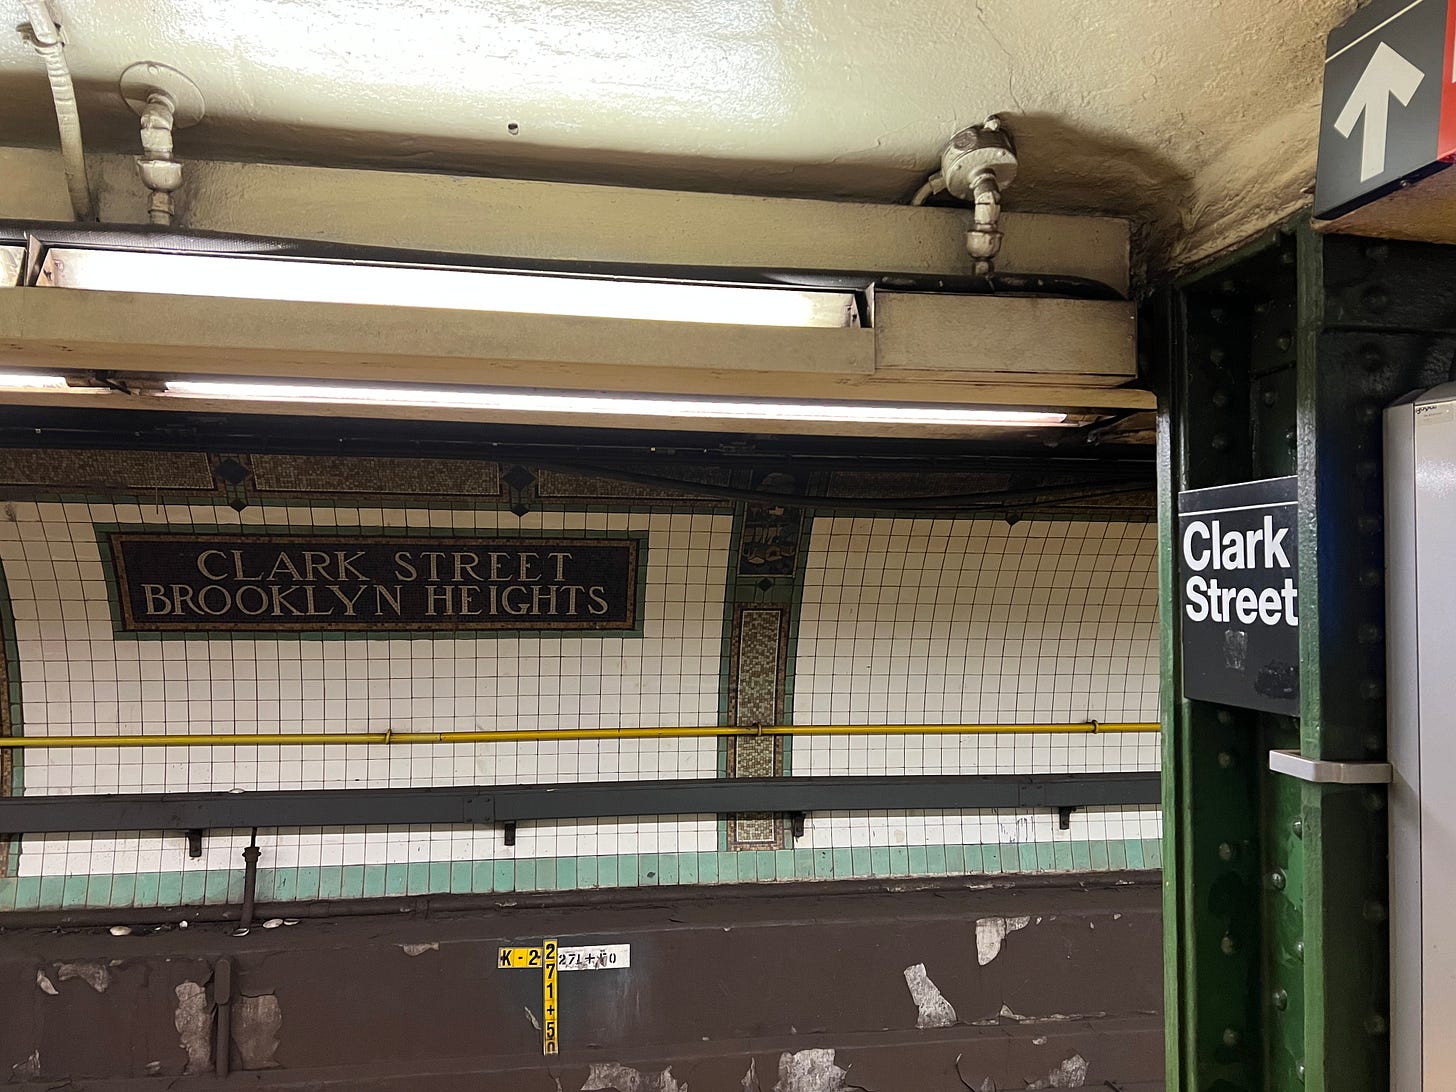 Clark Street Station in Brooklyn Heights